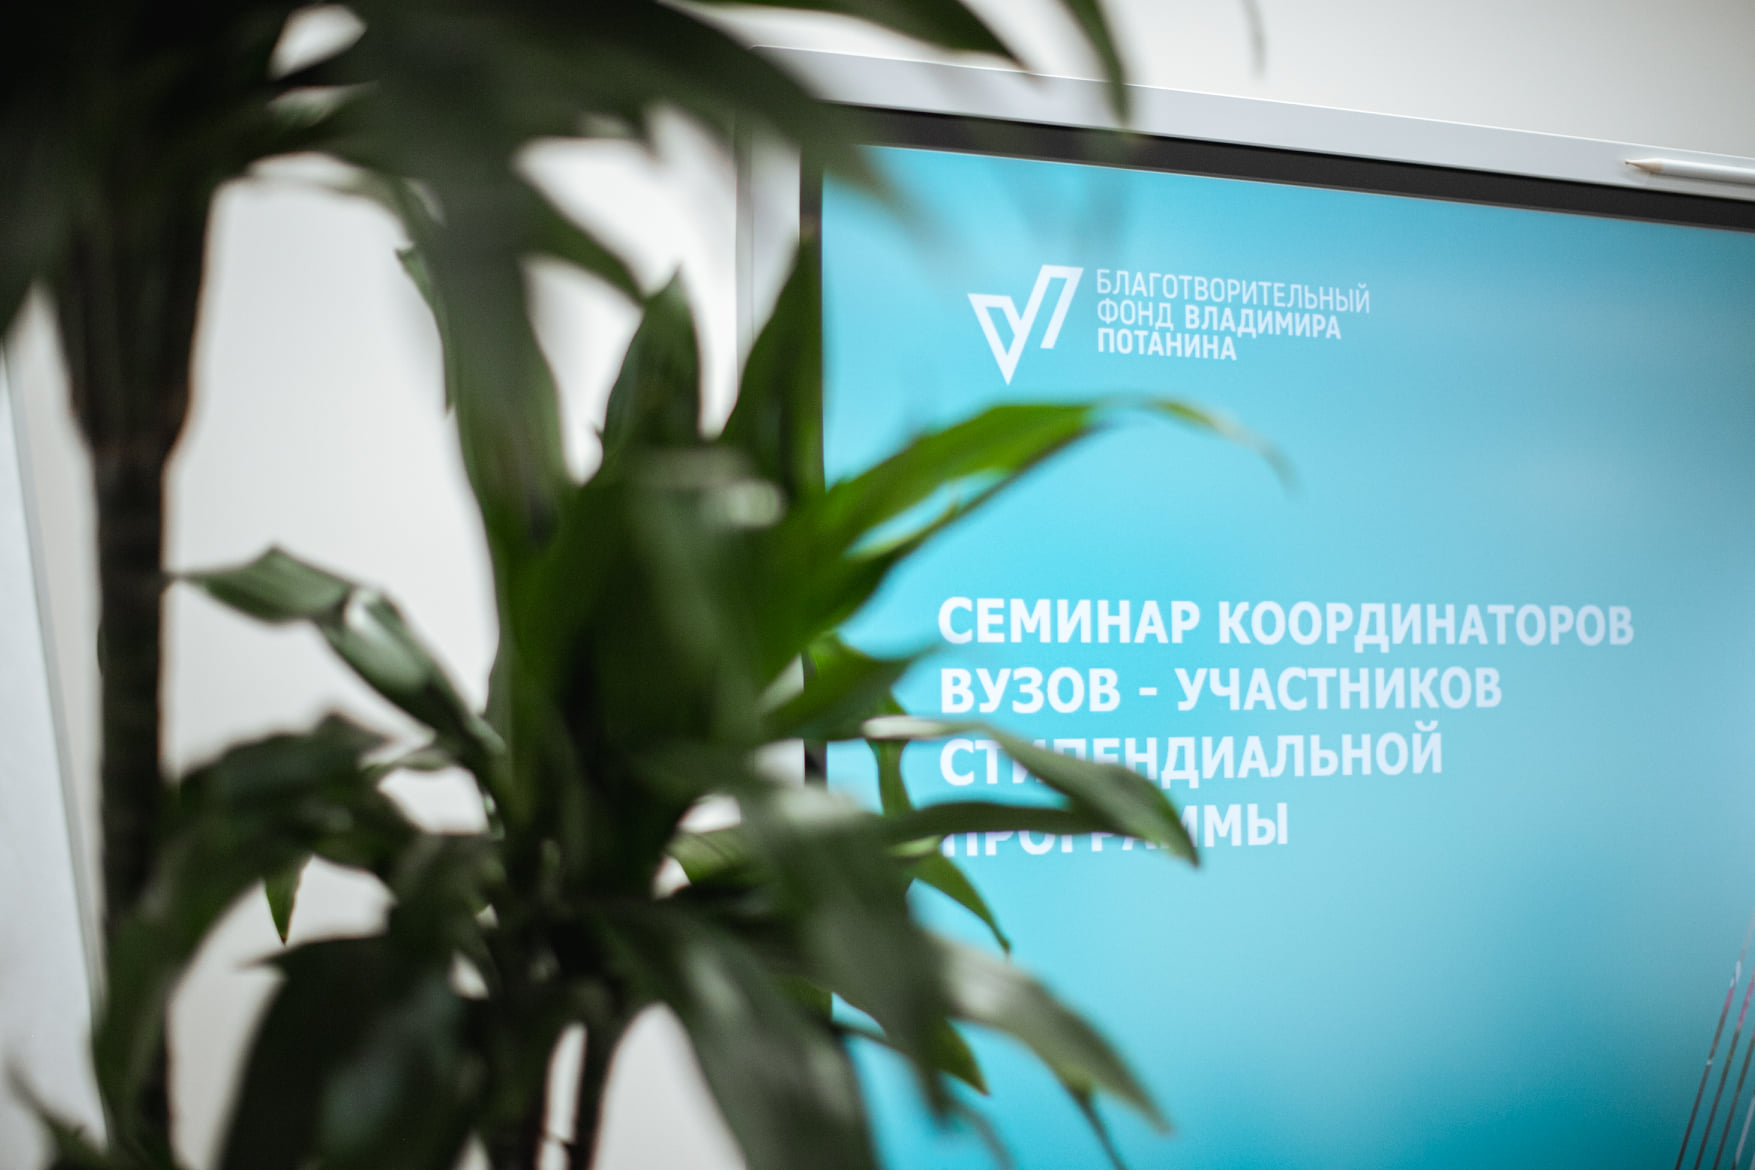 MCU takes 21-22nd place in the Vladimir Potanin Foundation University Ranking 2021